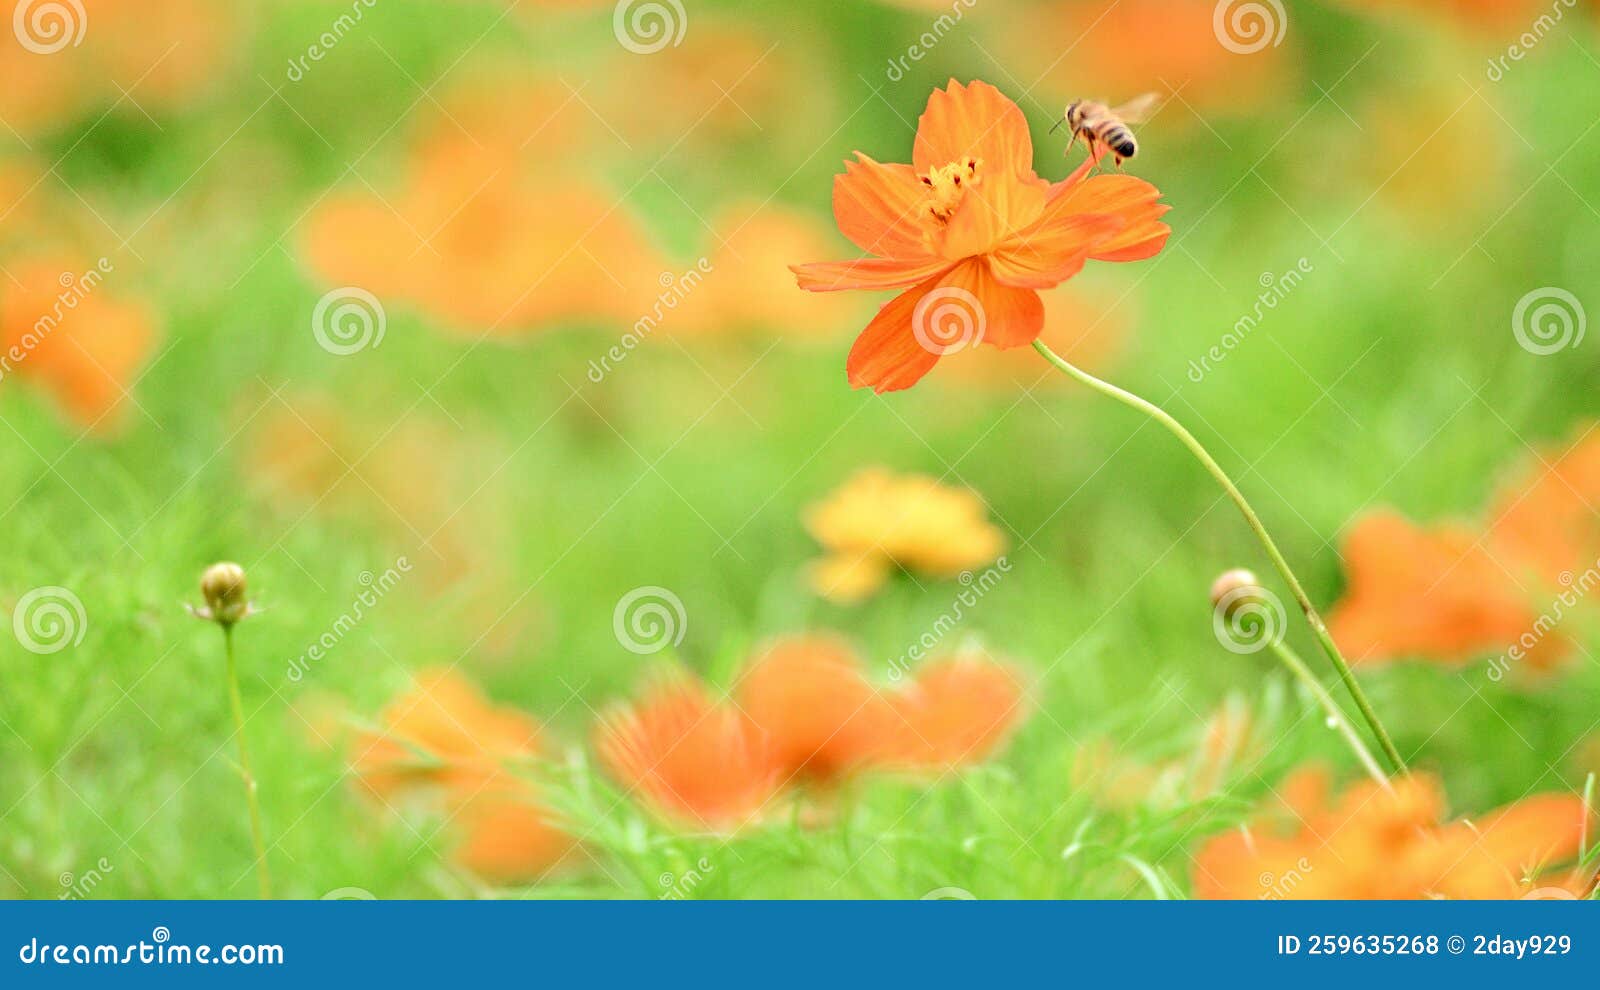 cosmos sulphureus and honey bee, nature, flower, spring, banner